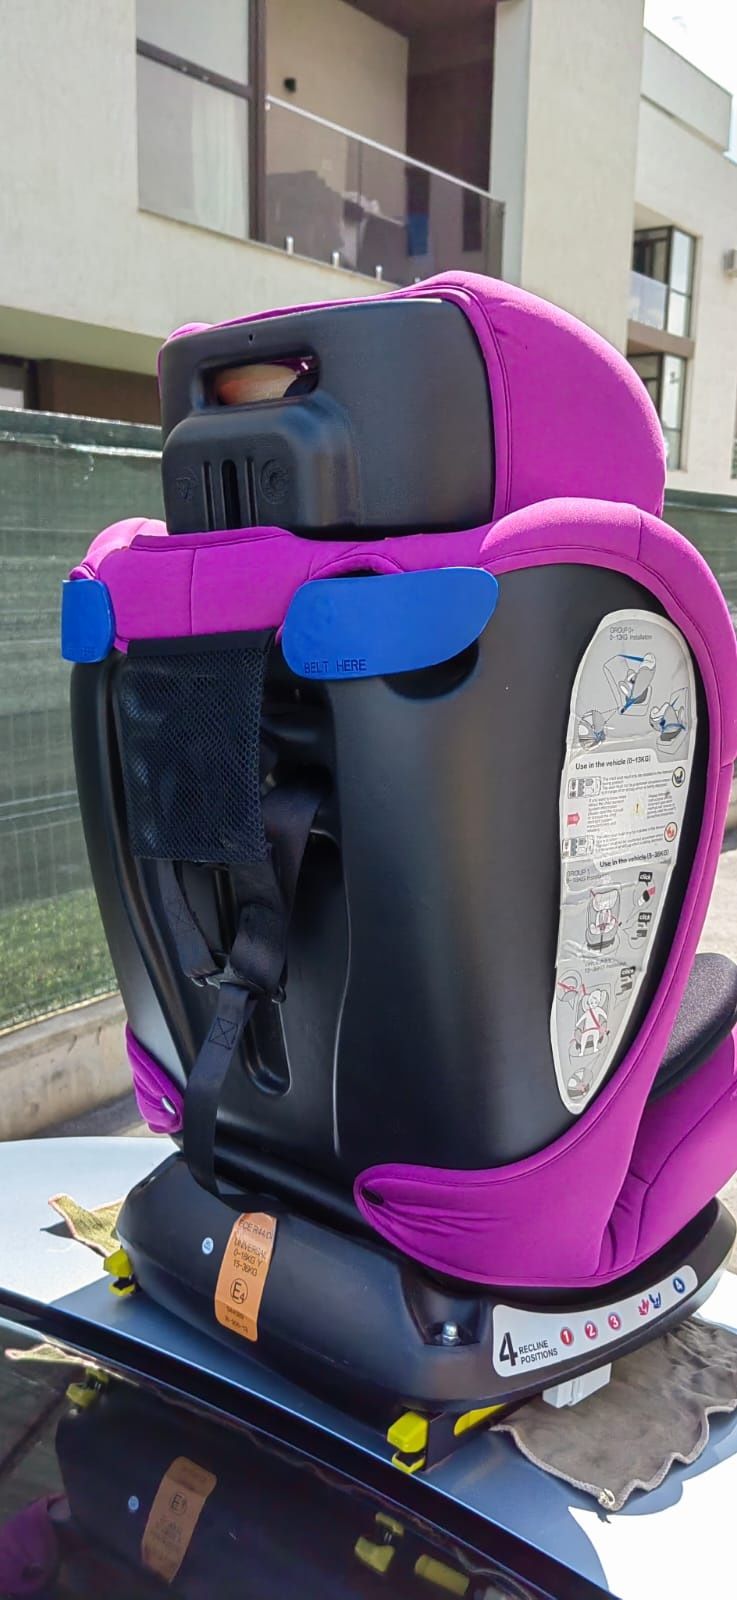 Scaun Auto copii Riola cu Isofix BUF BOOF Purple 0 36 kg pozitie somn